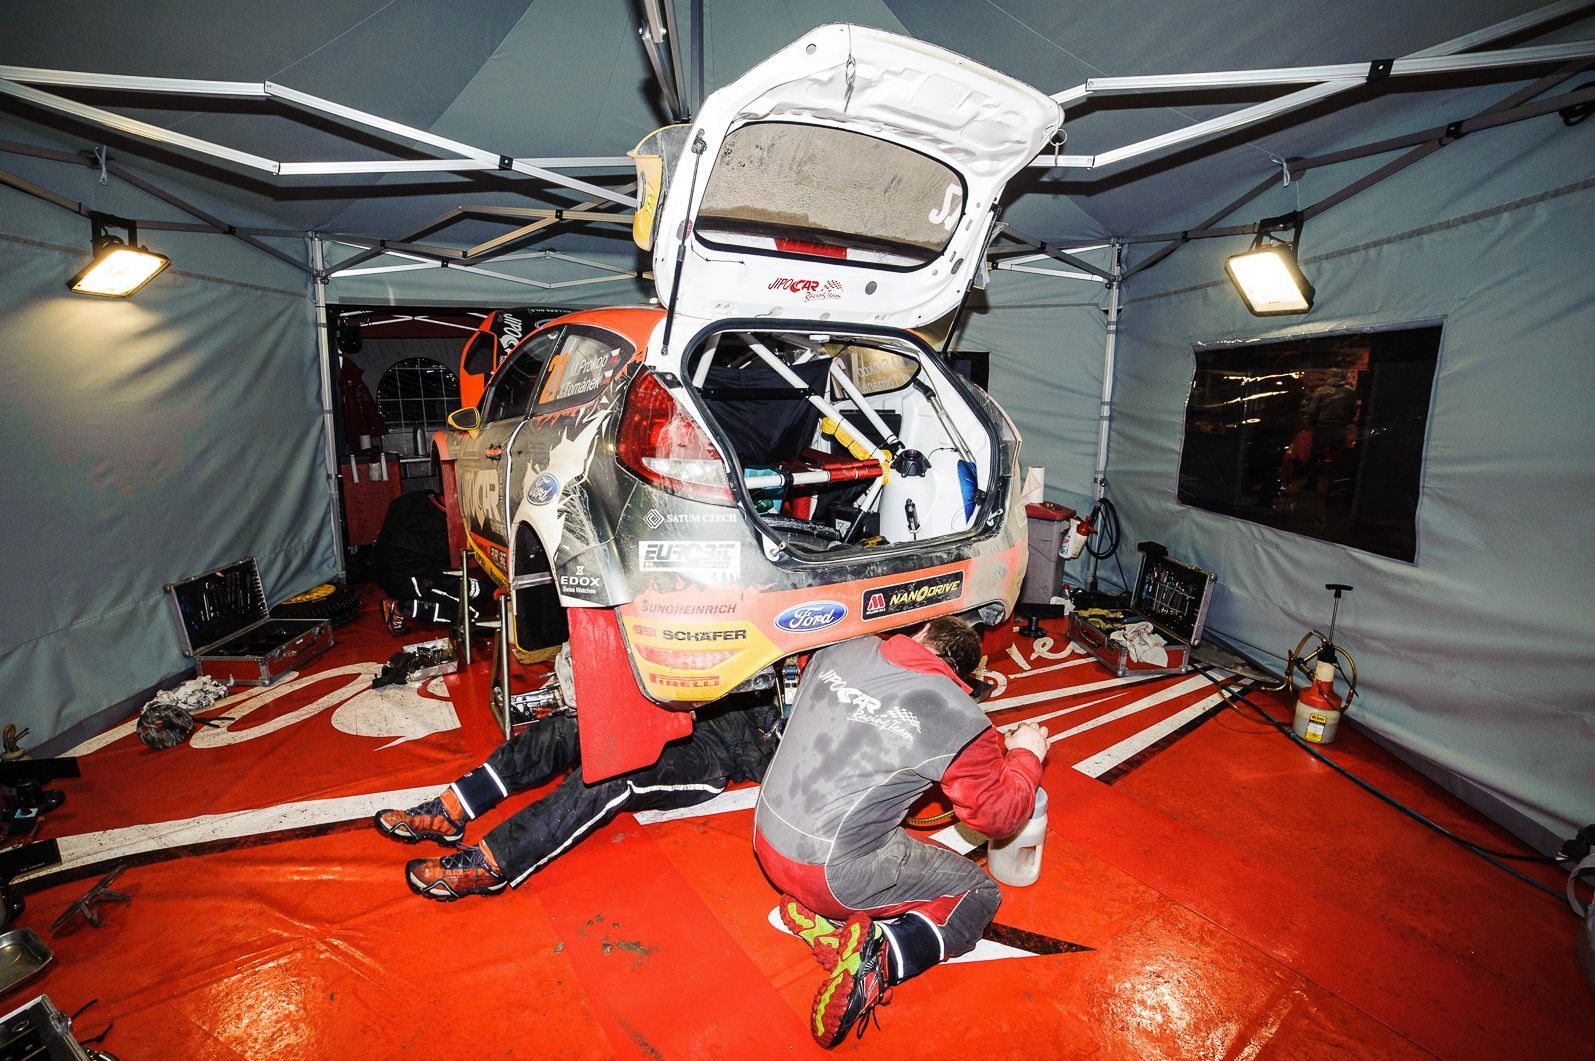 Švédská rallye 2015: Martin Prokop, Ford Fiesta RS WRC